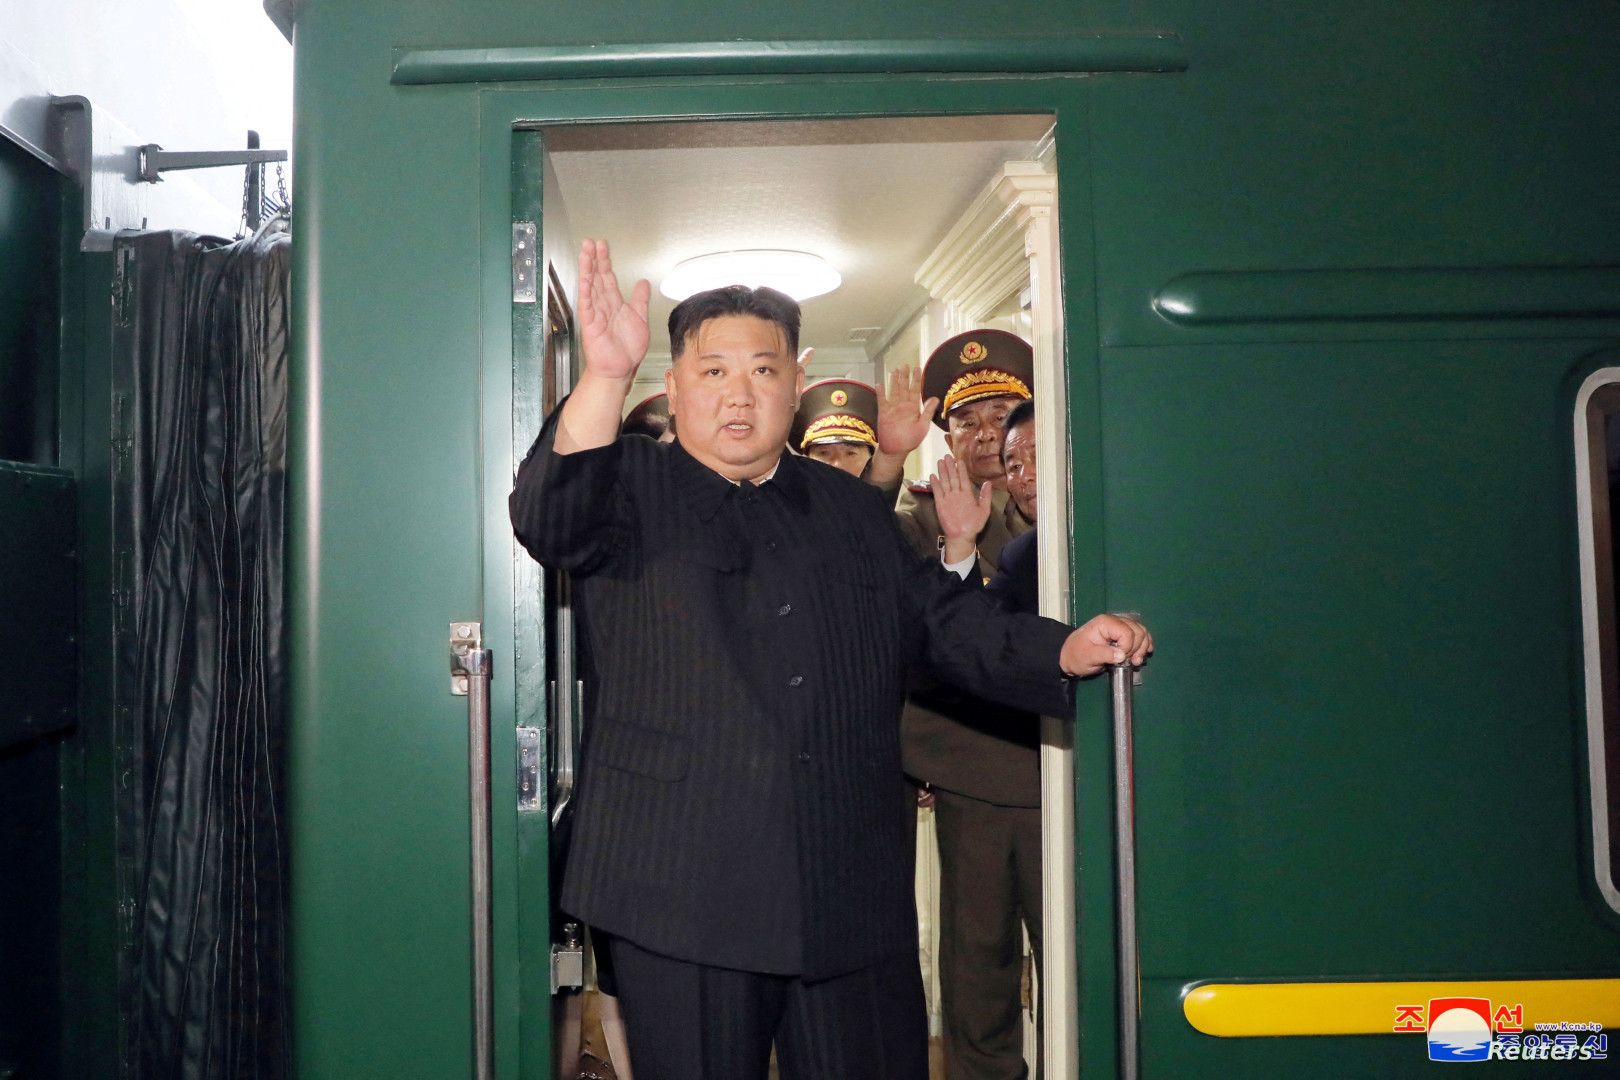 Kim Jong Un arrives in Russia in amored train